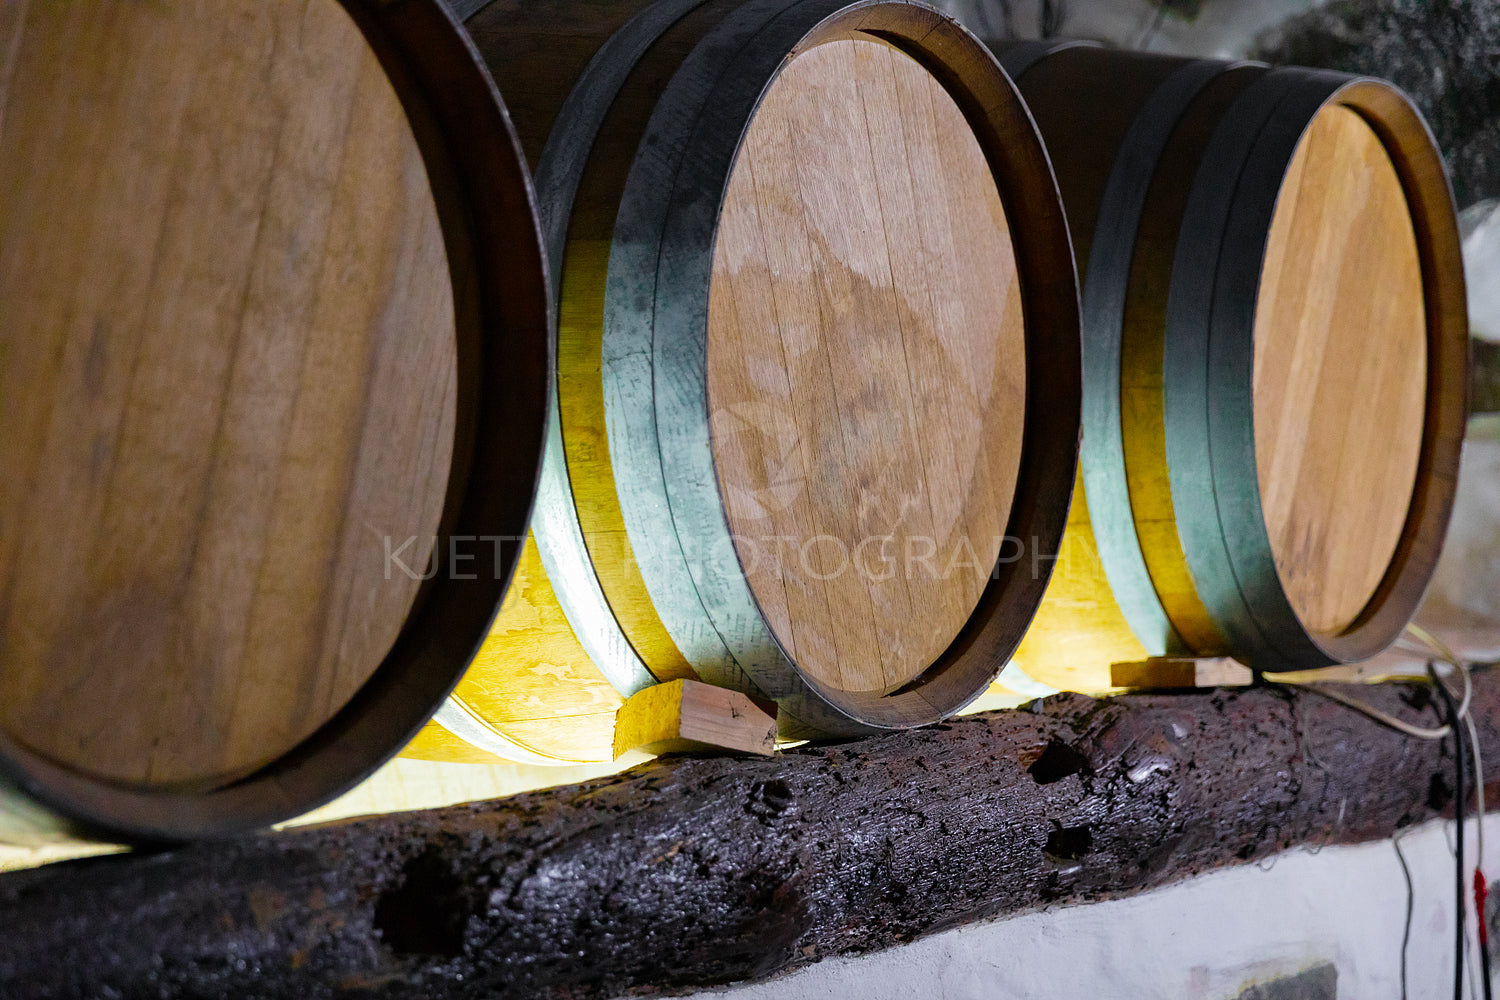 Wooden Barrels At Wine Storeroom in Cellar